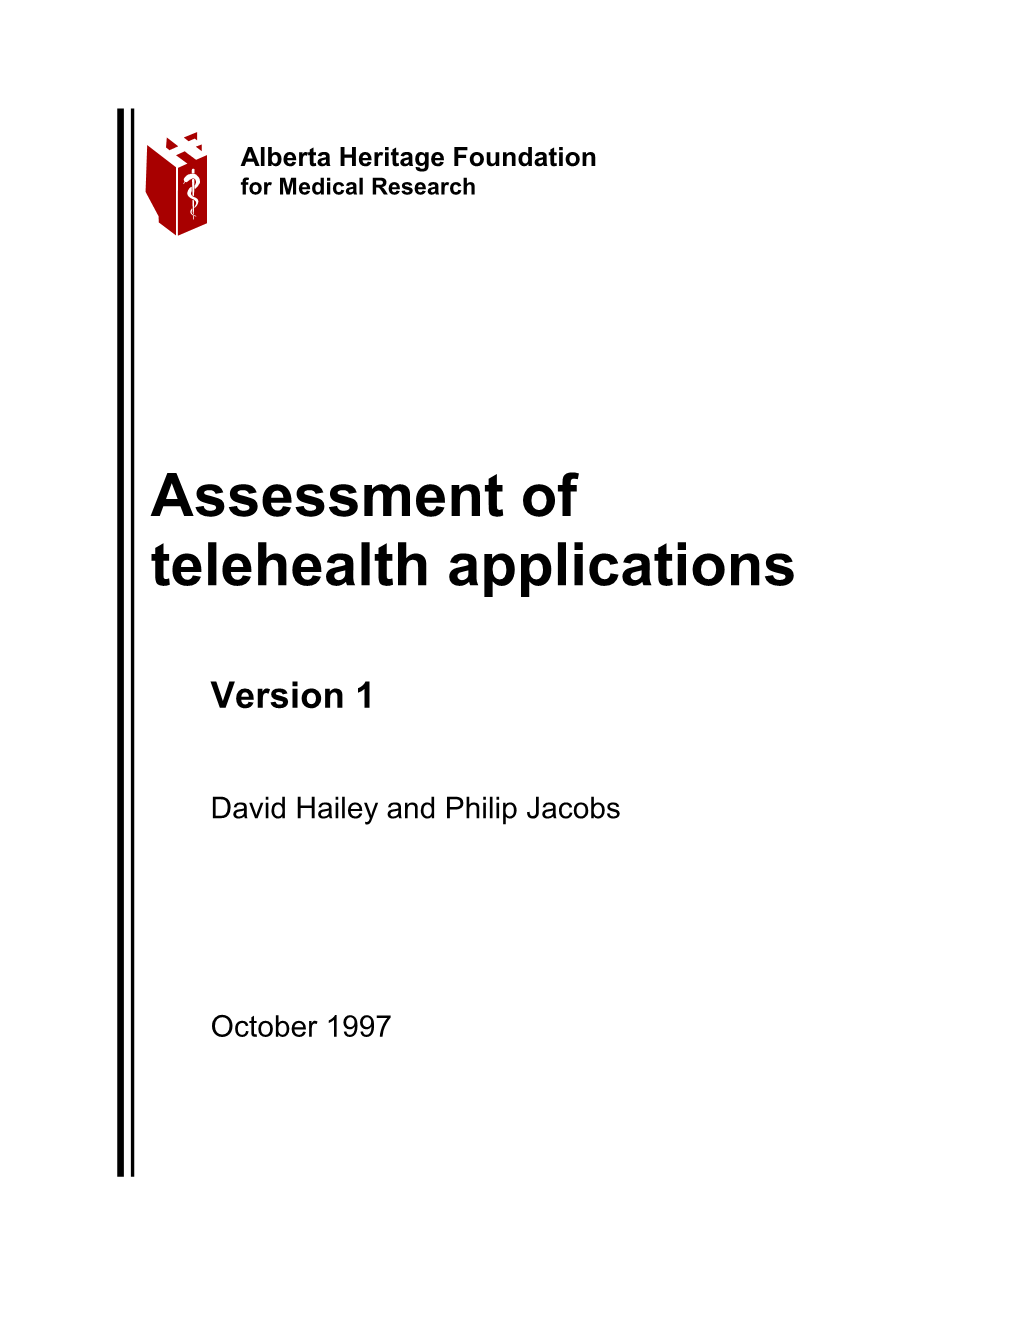 Assessment of Telehealth Applications